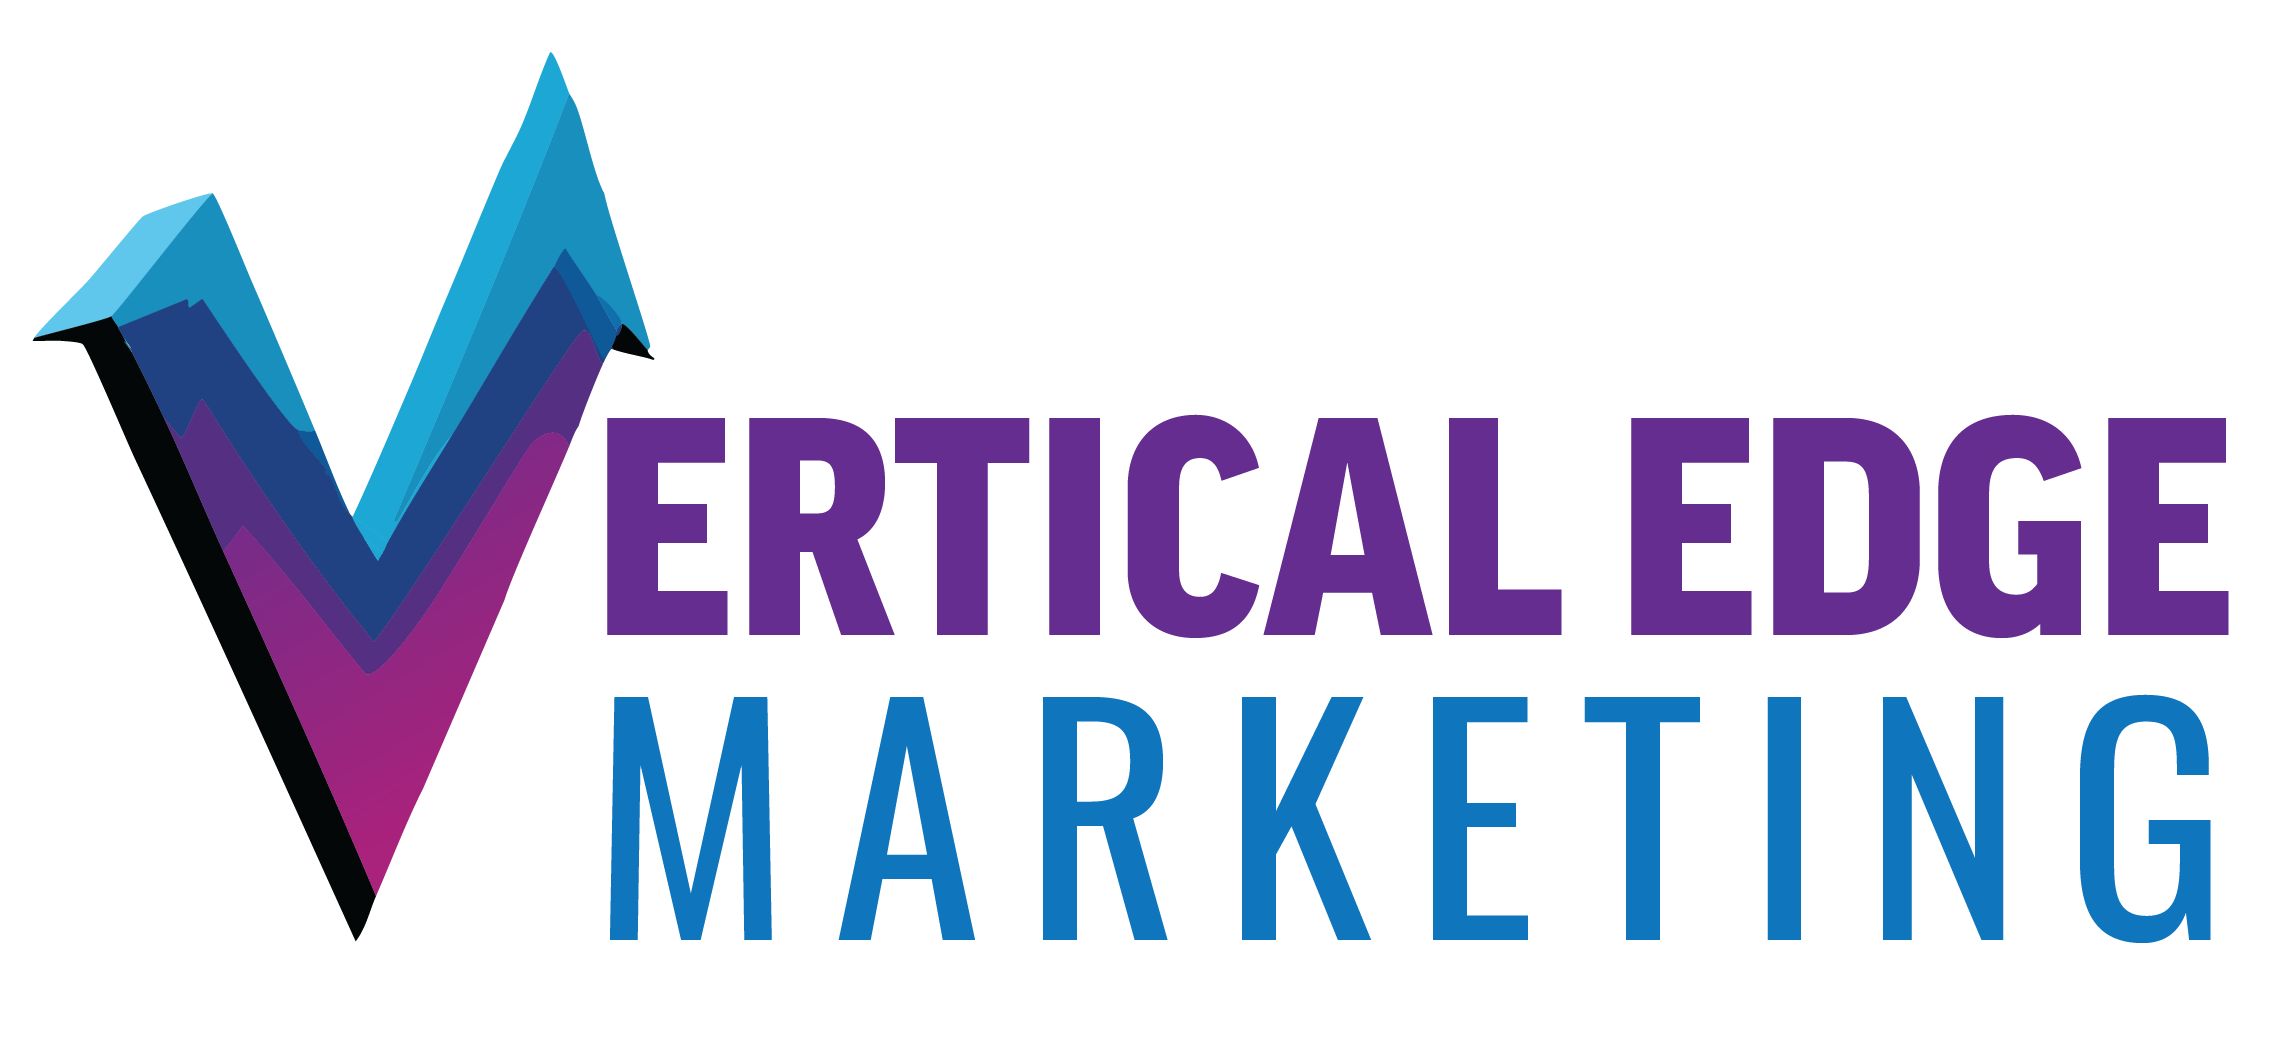 Vertical Edge Marketing Logo